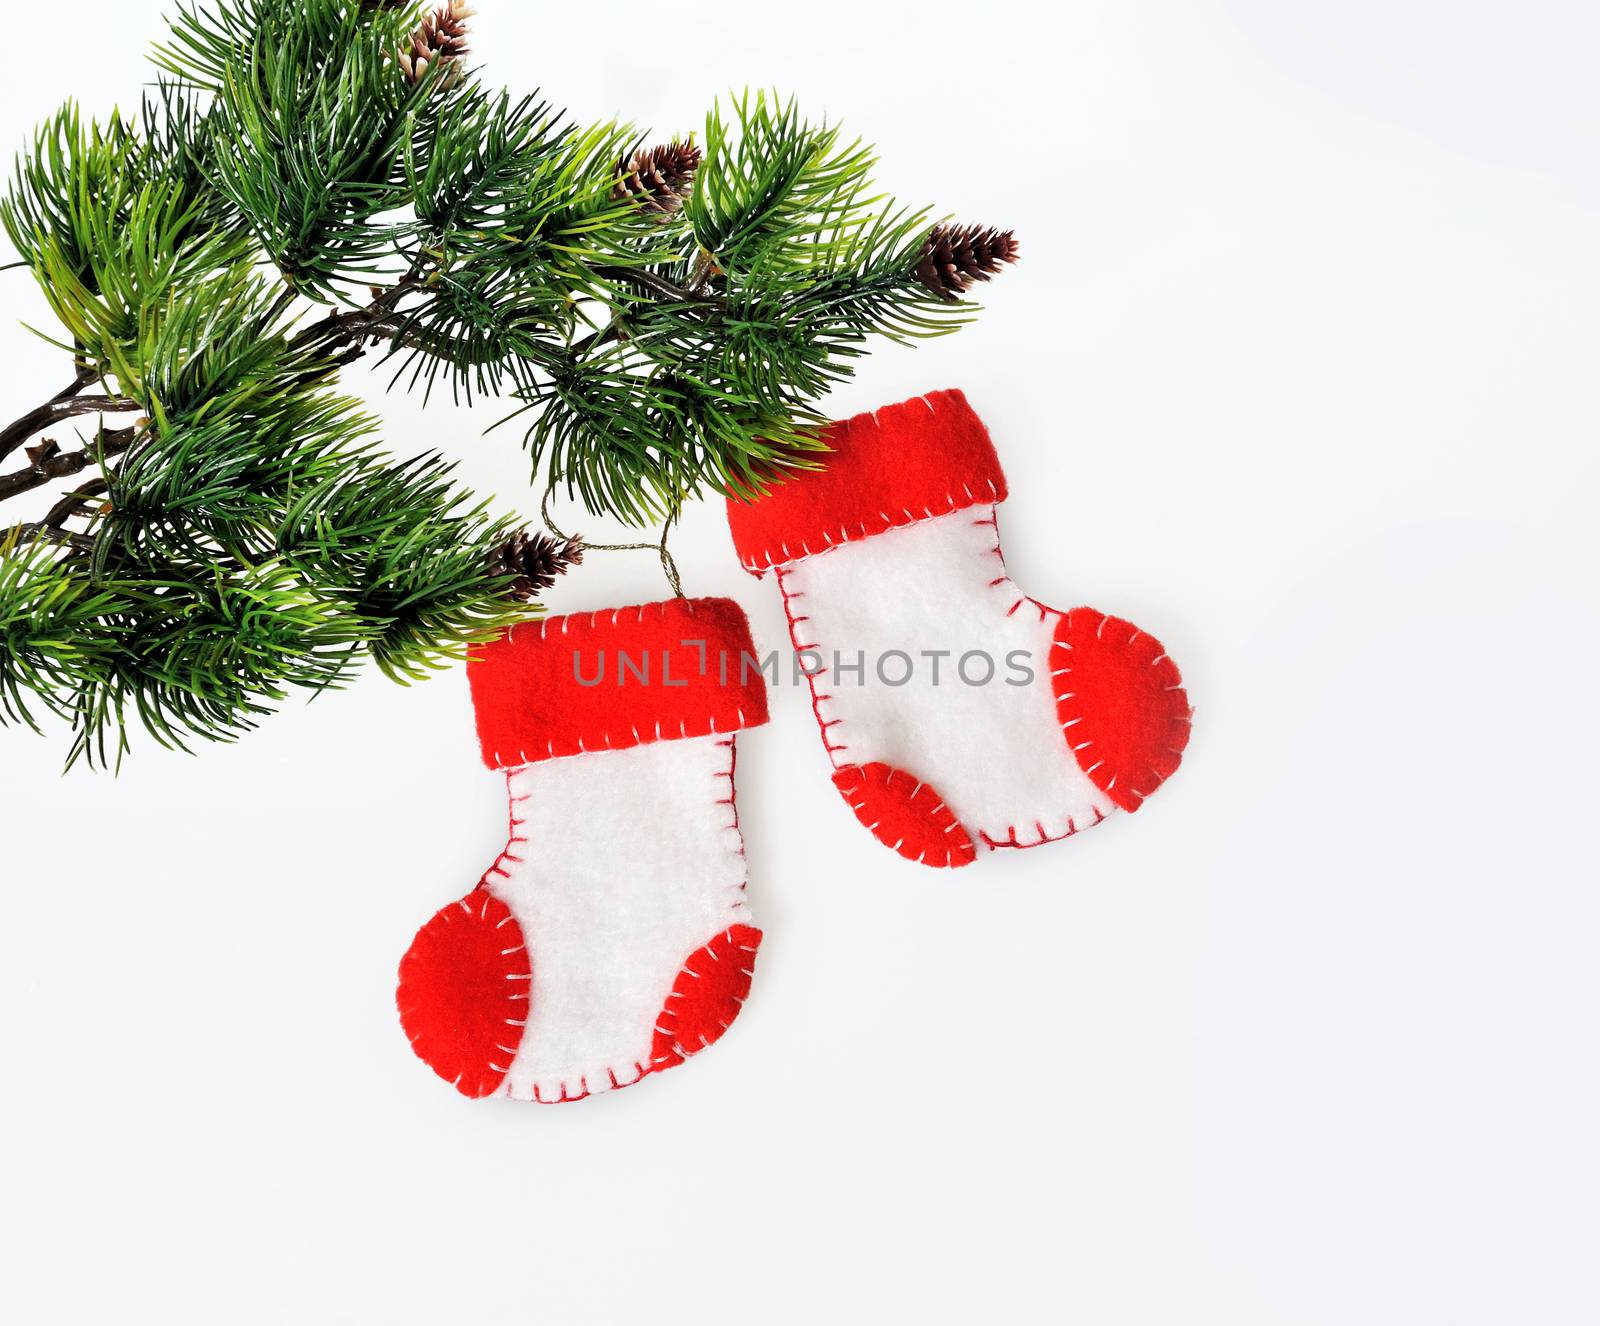 Two Santa's boots on christmas tree